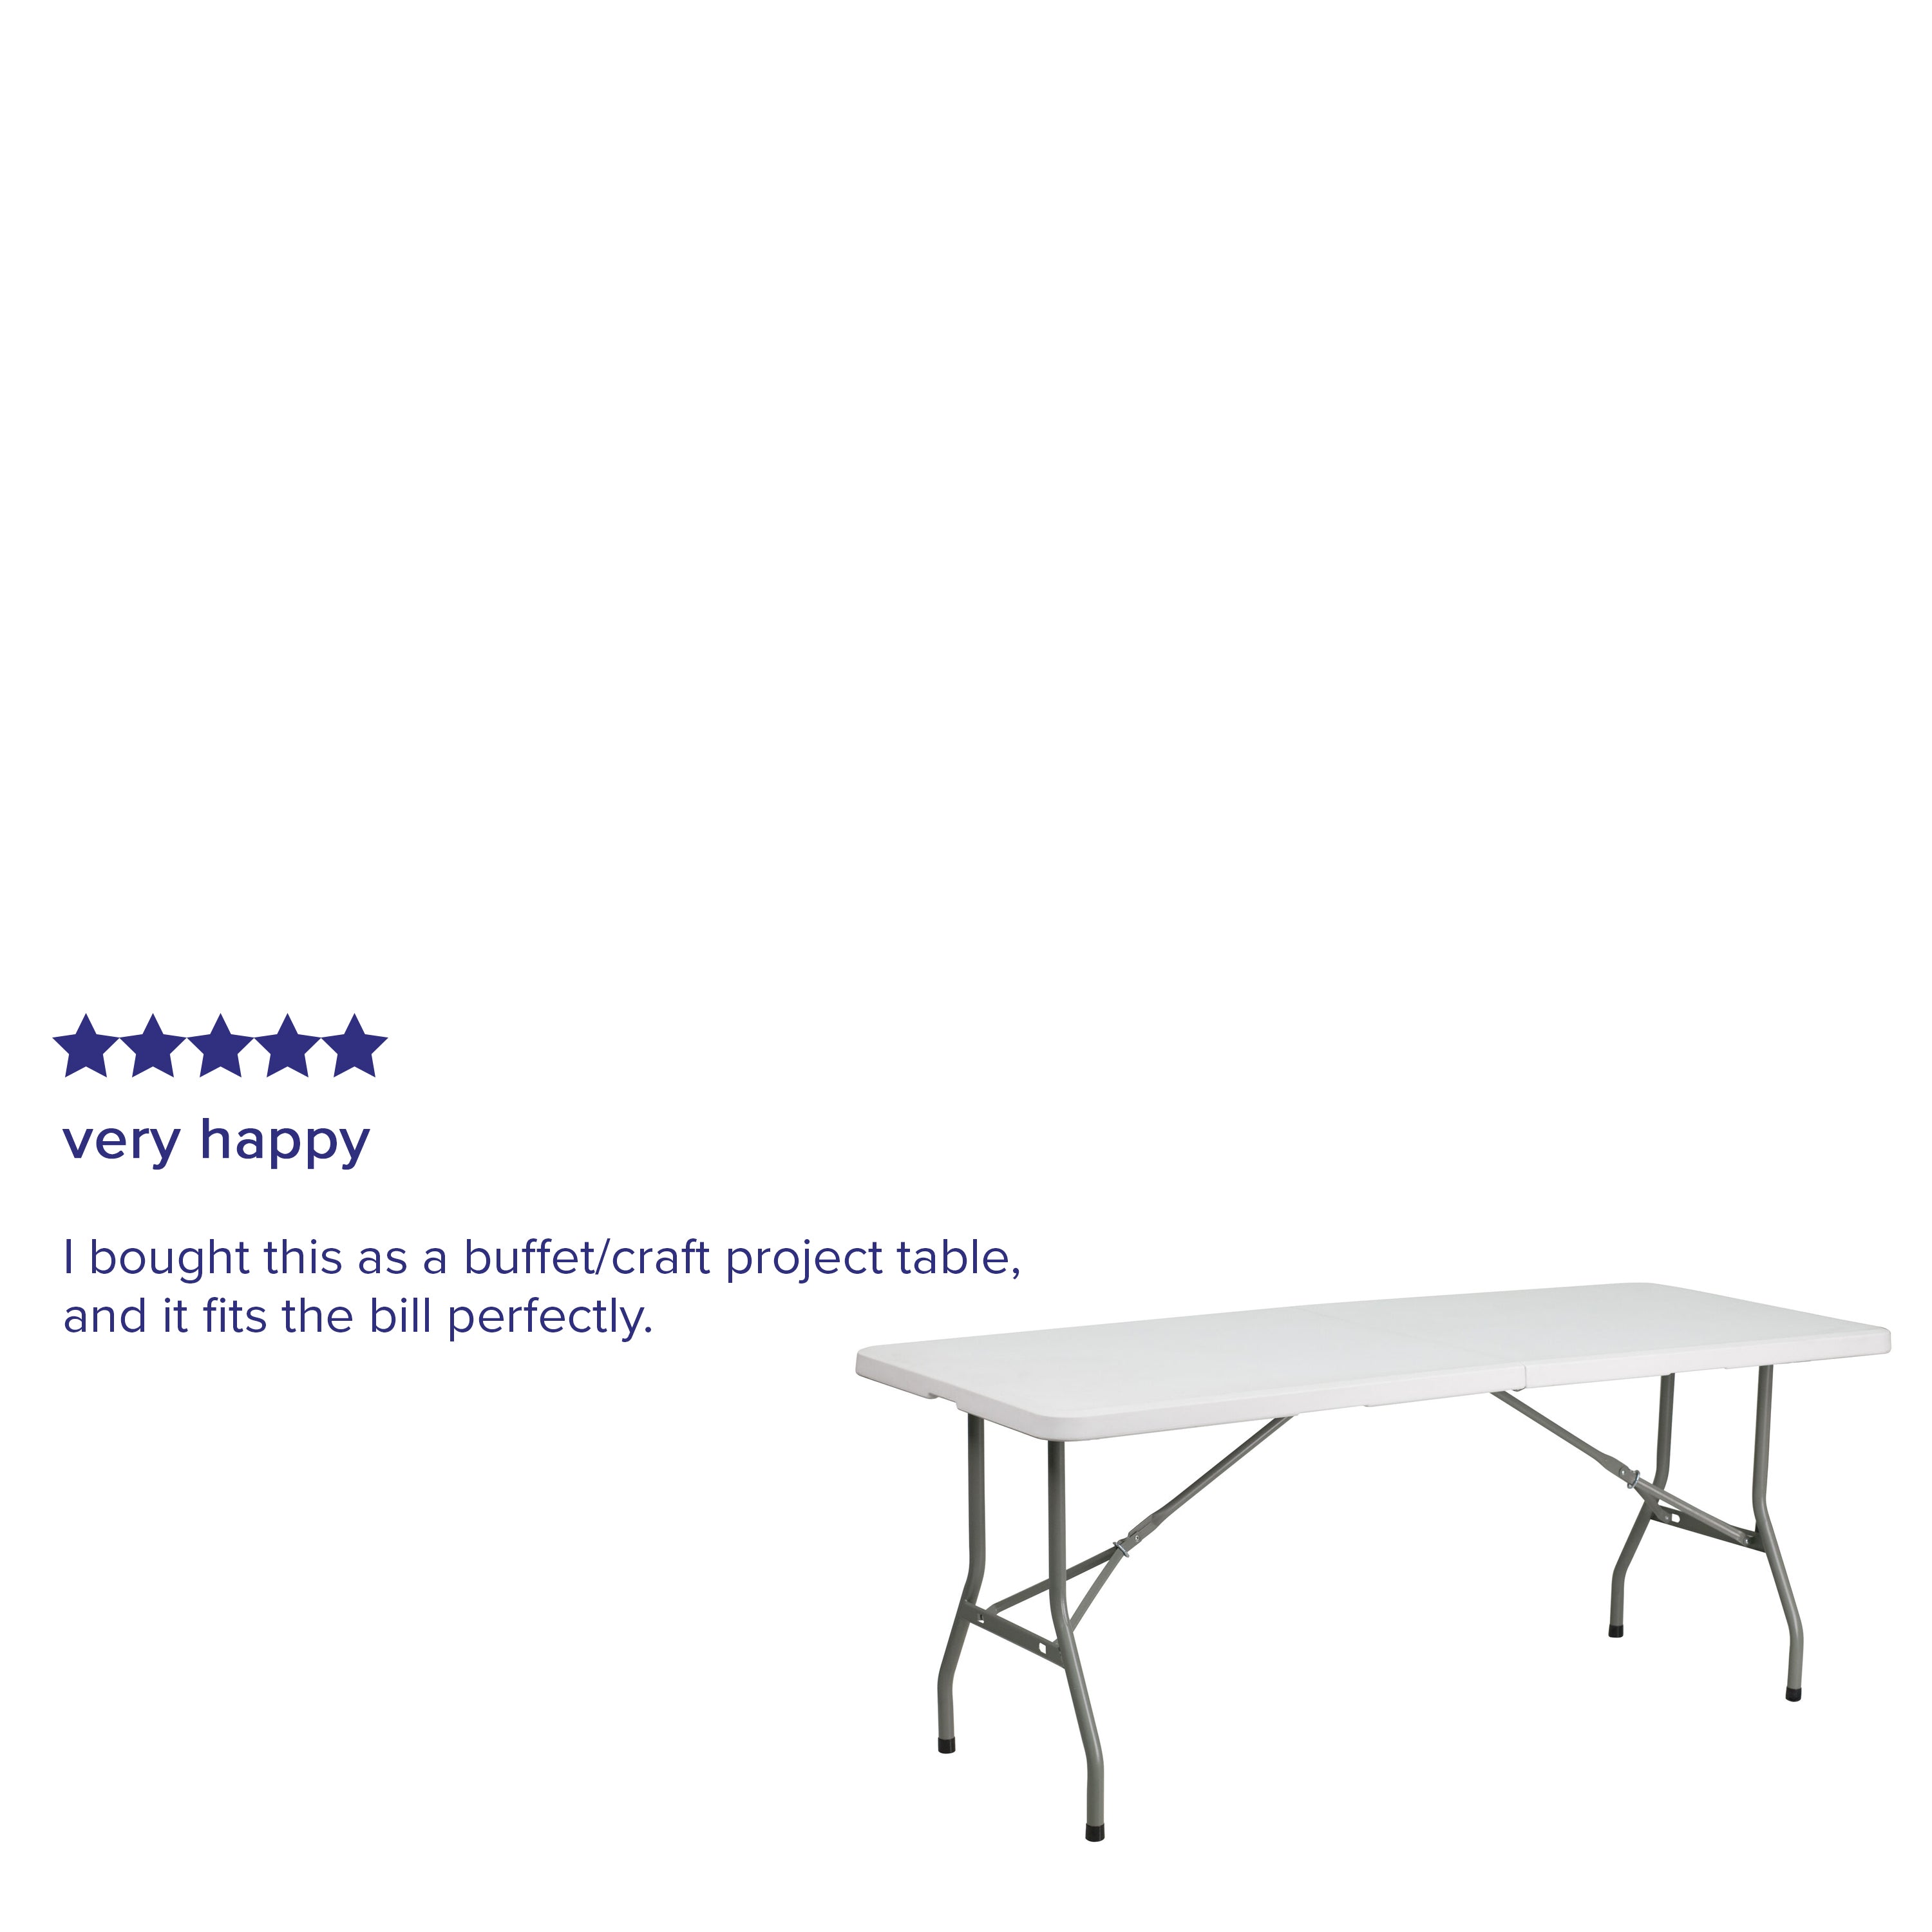 6-Foot Bi-Fold Plastic Folding Table-Rectangular Plastic Folding Table-Flash Furniture-Wall2Wall Furnishings